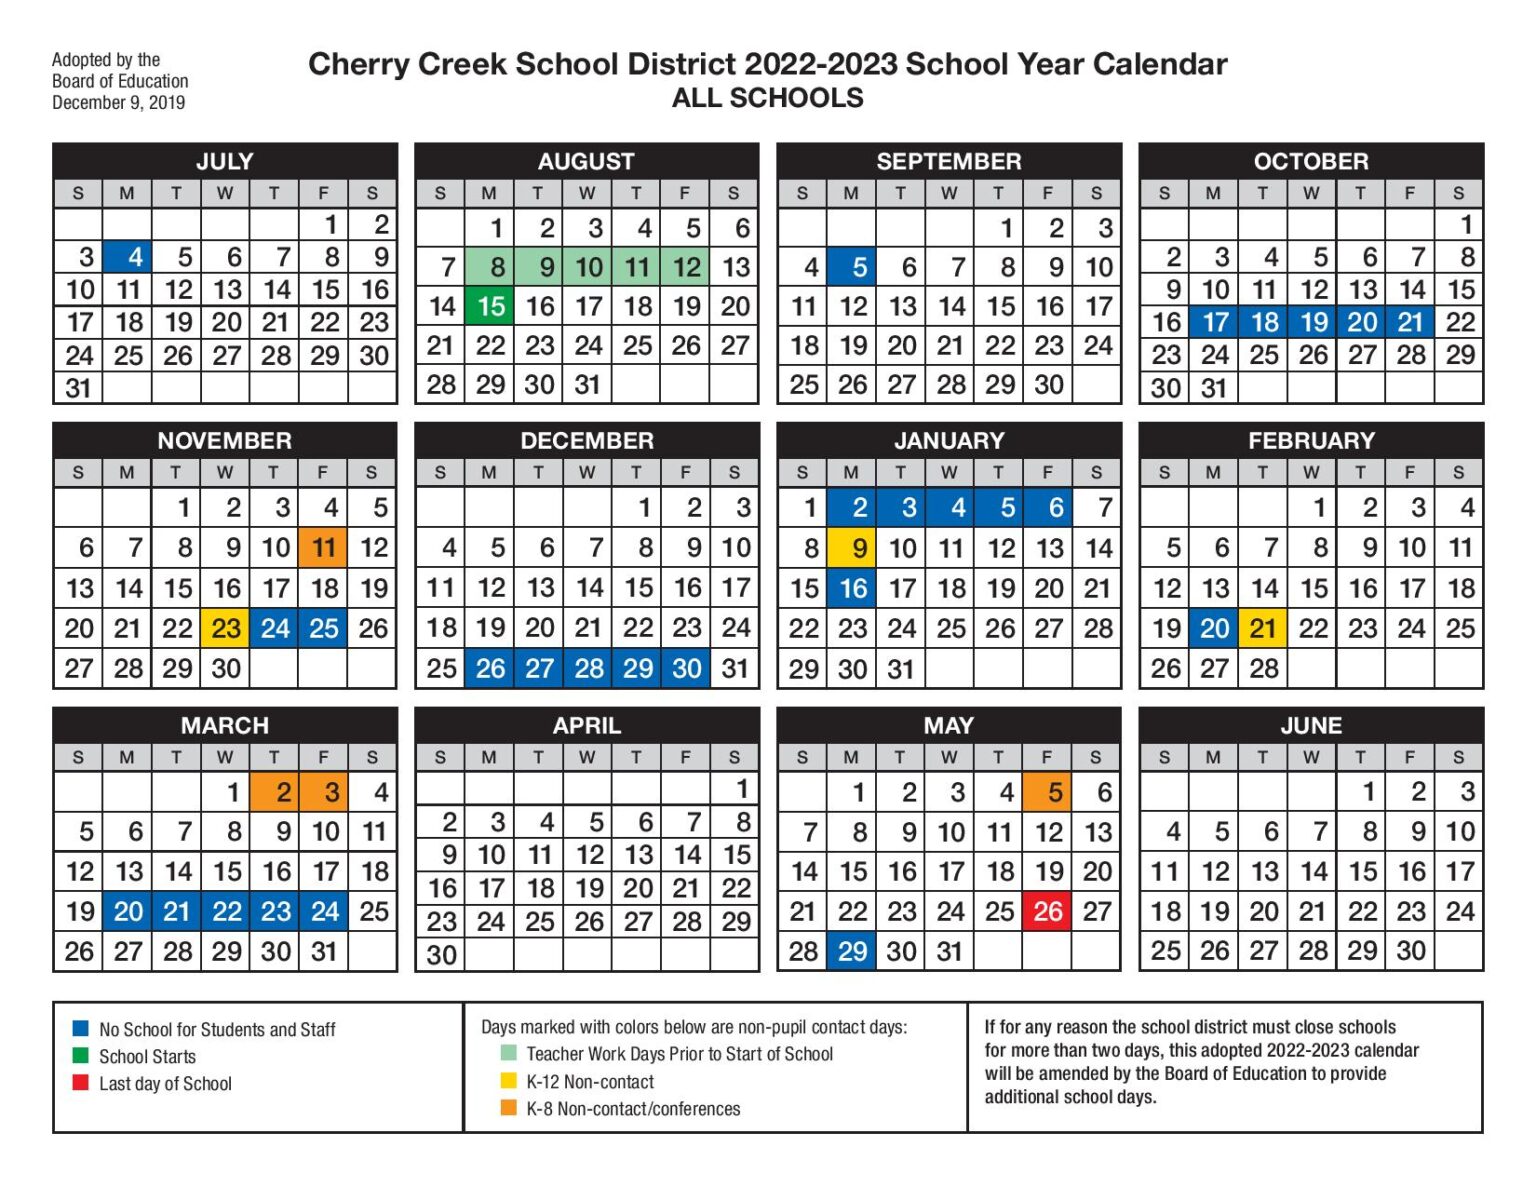 Cherry Creek School District Calendar & Holidays 20222023